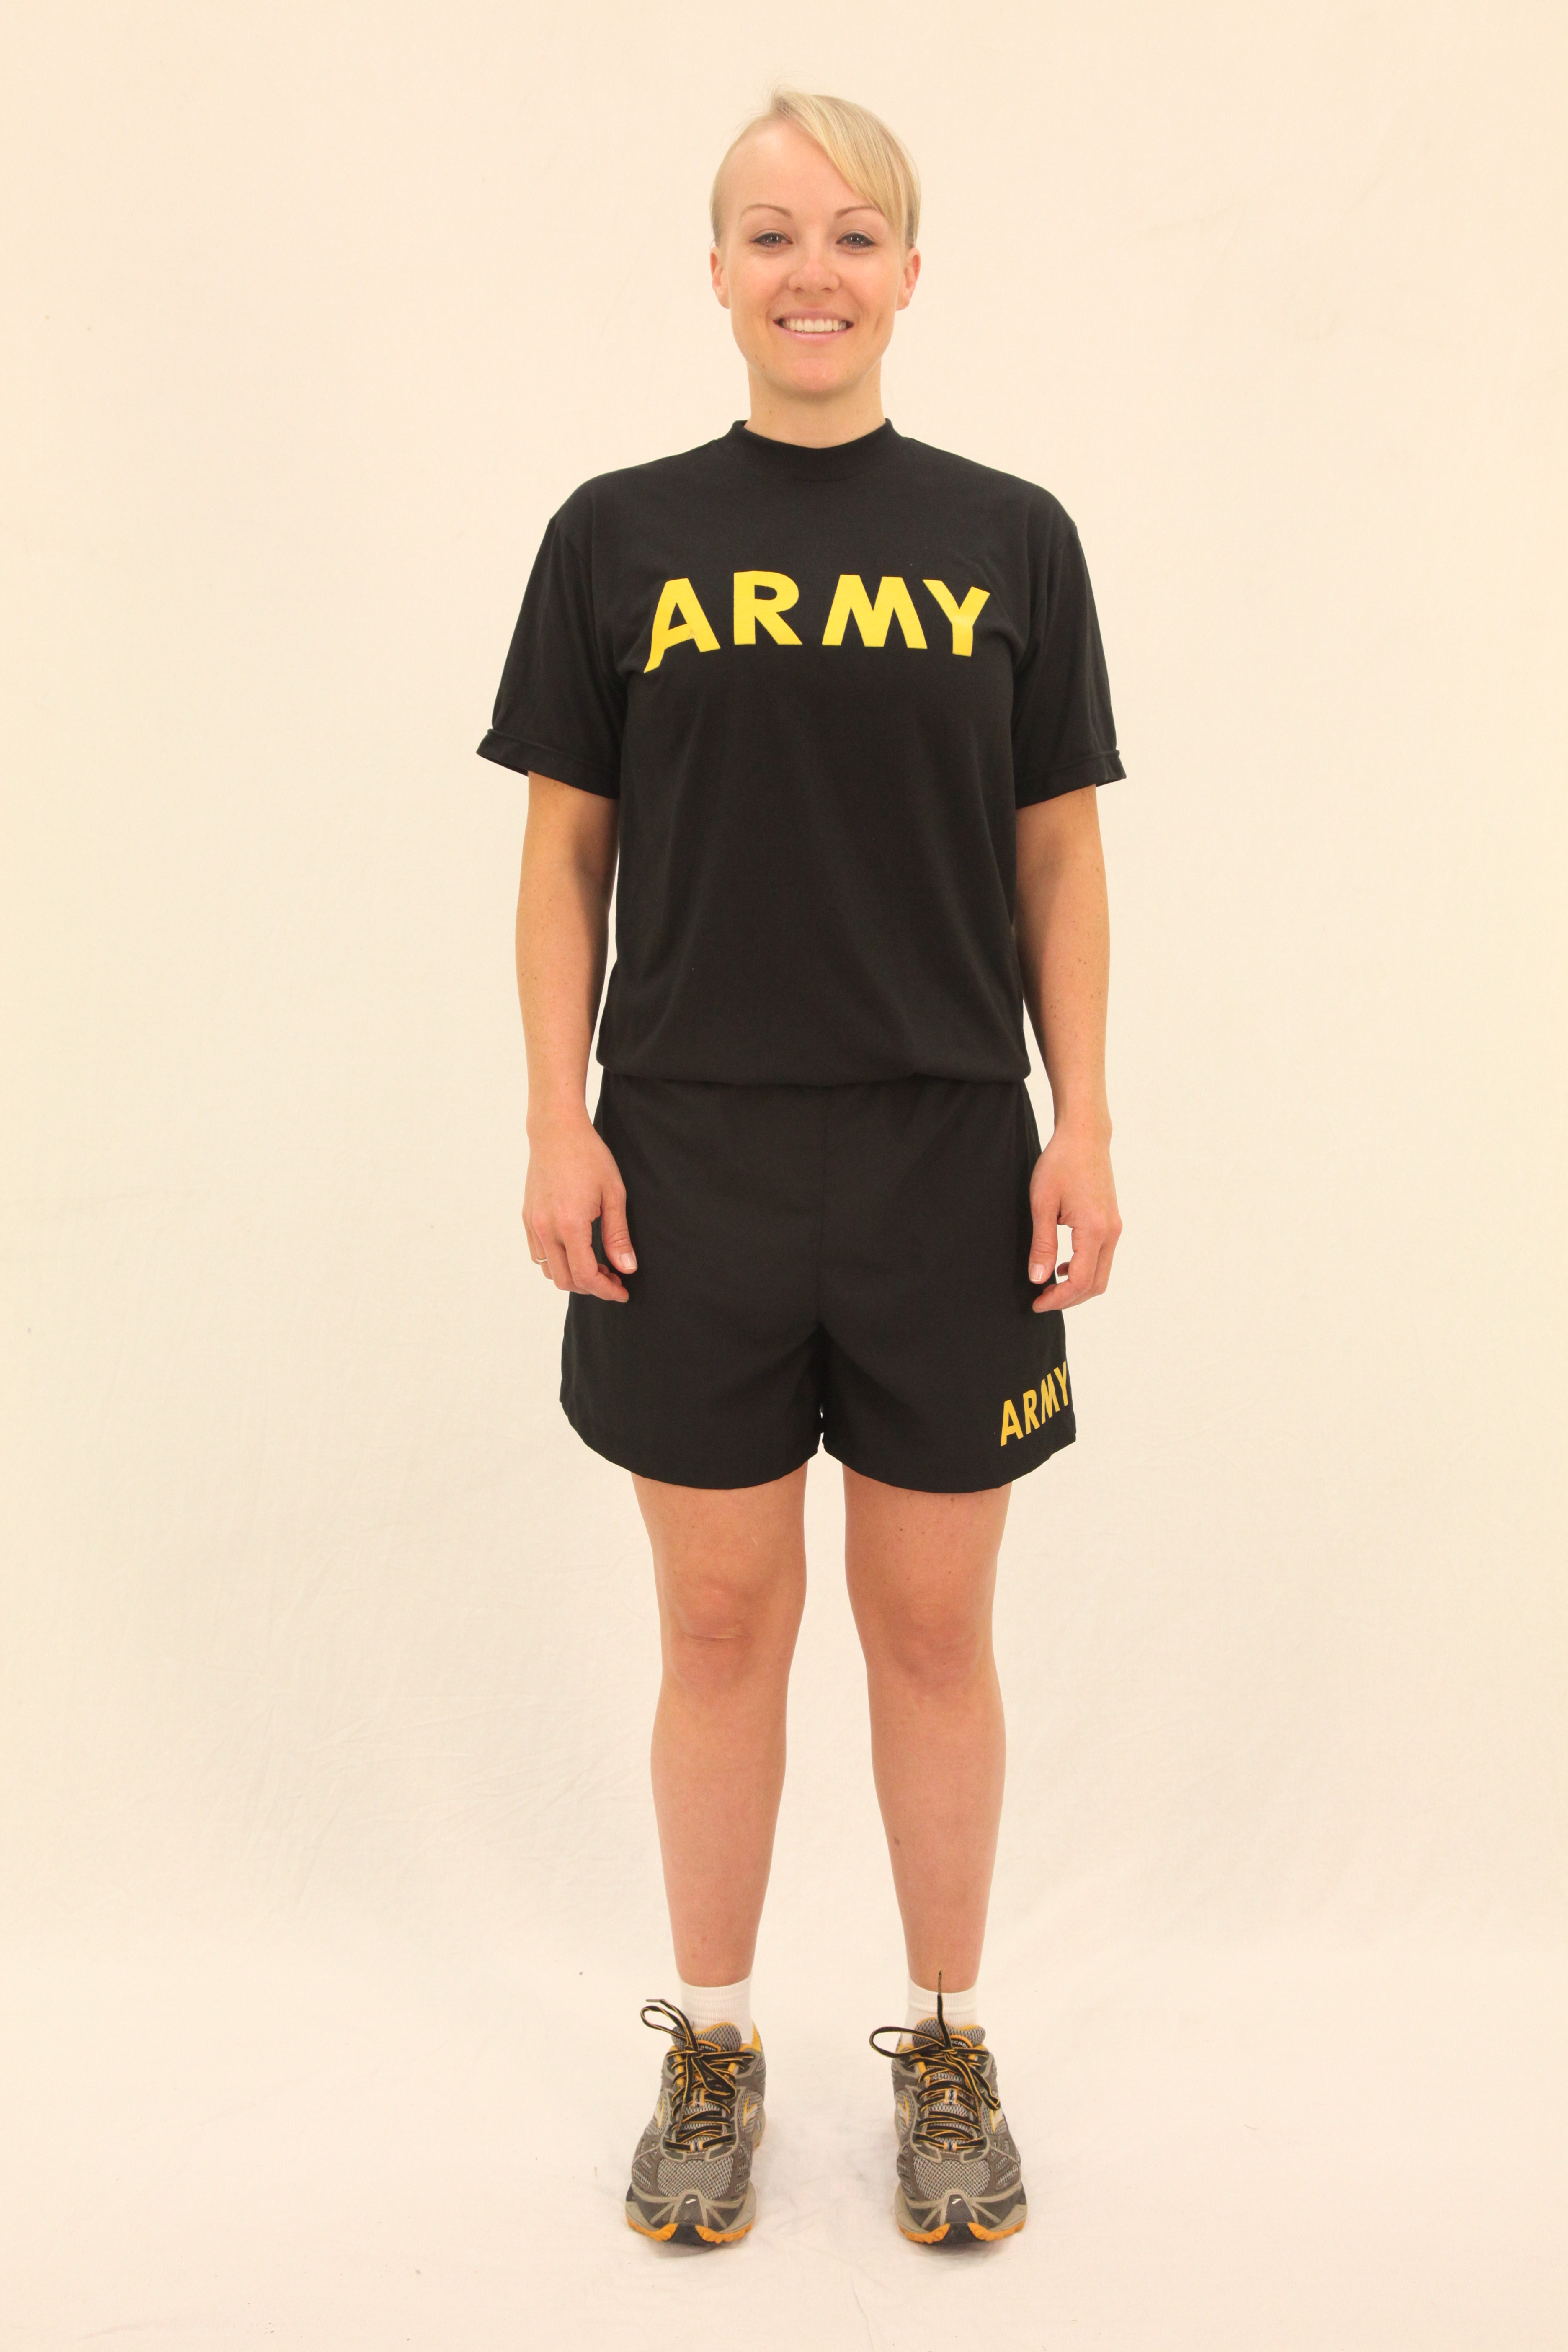 new army pt uniform regulation